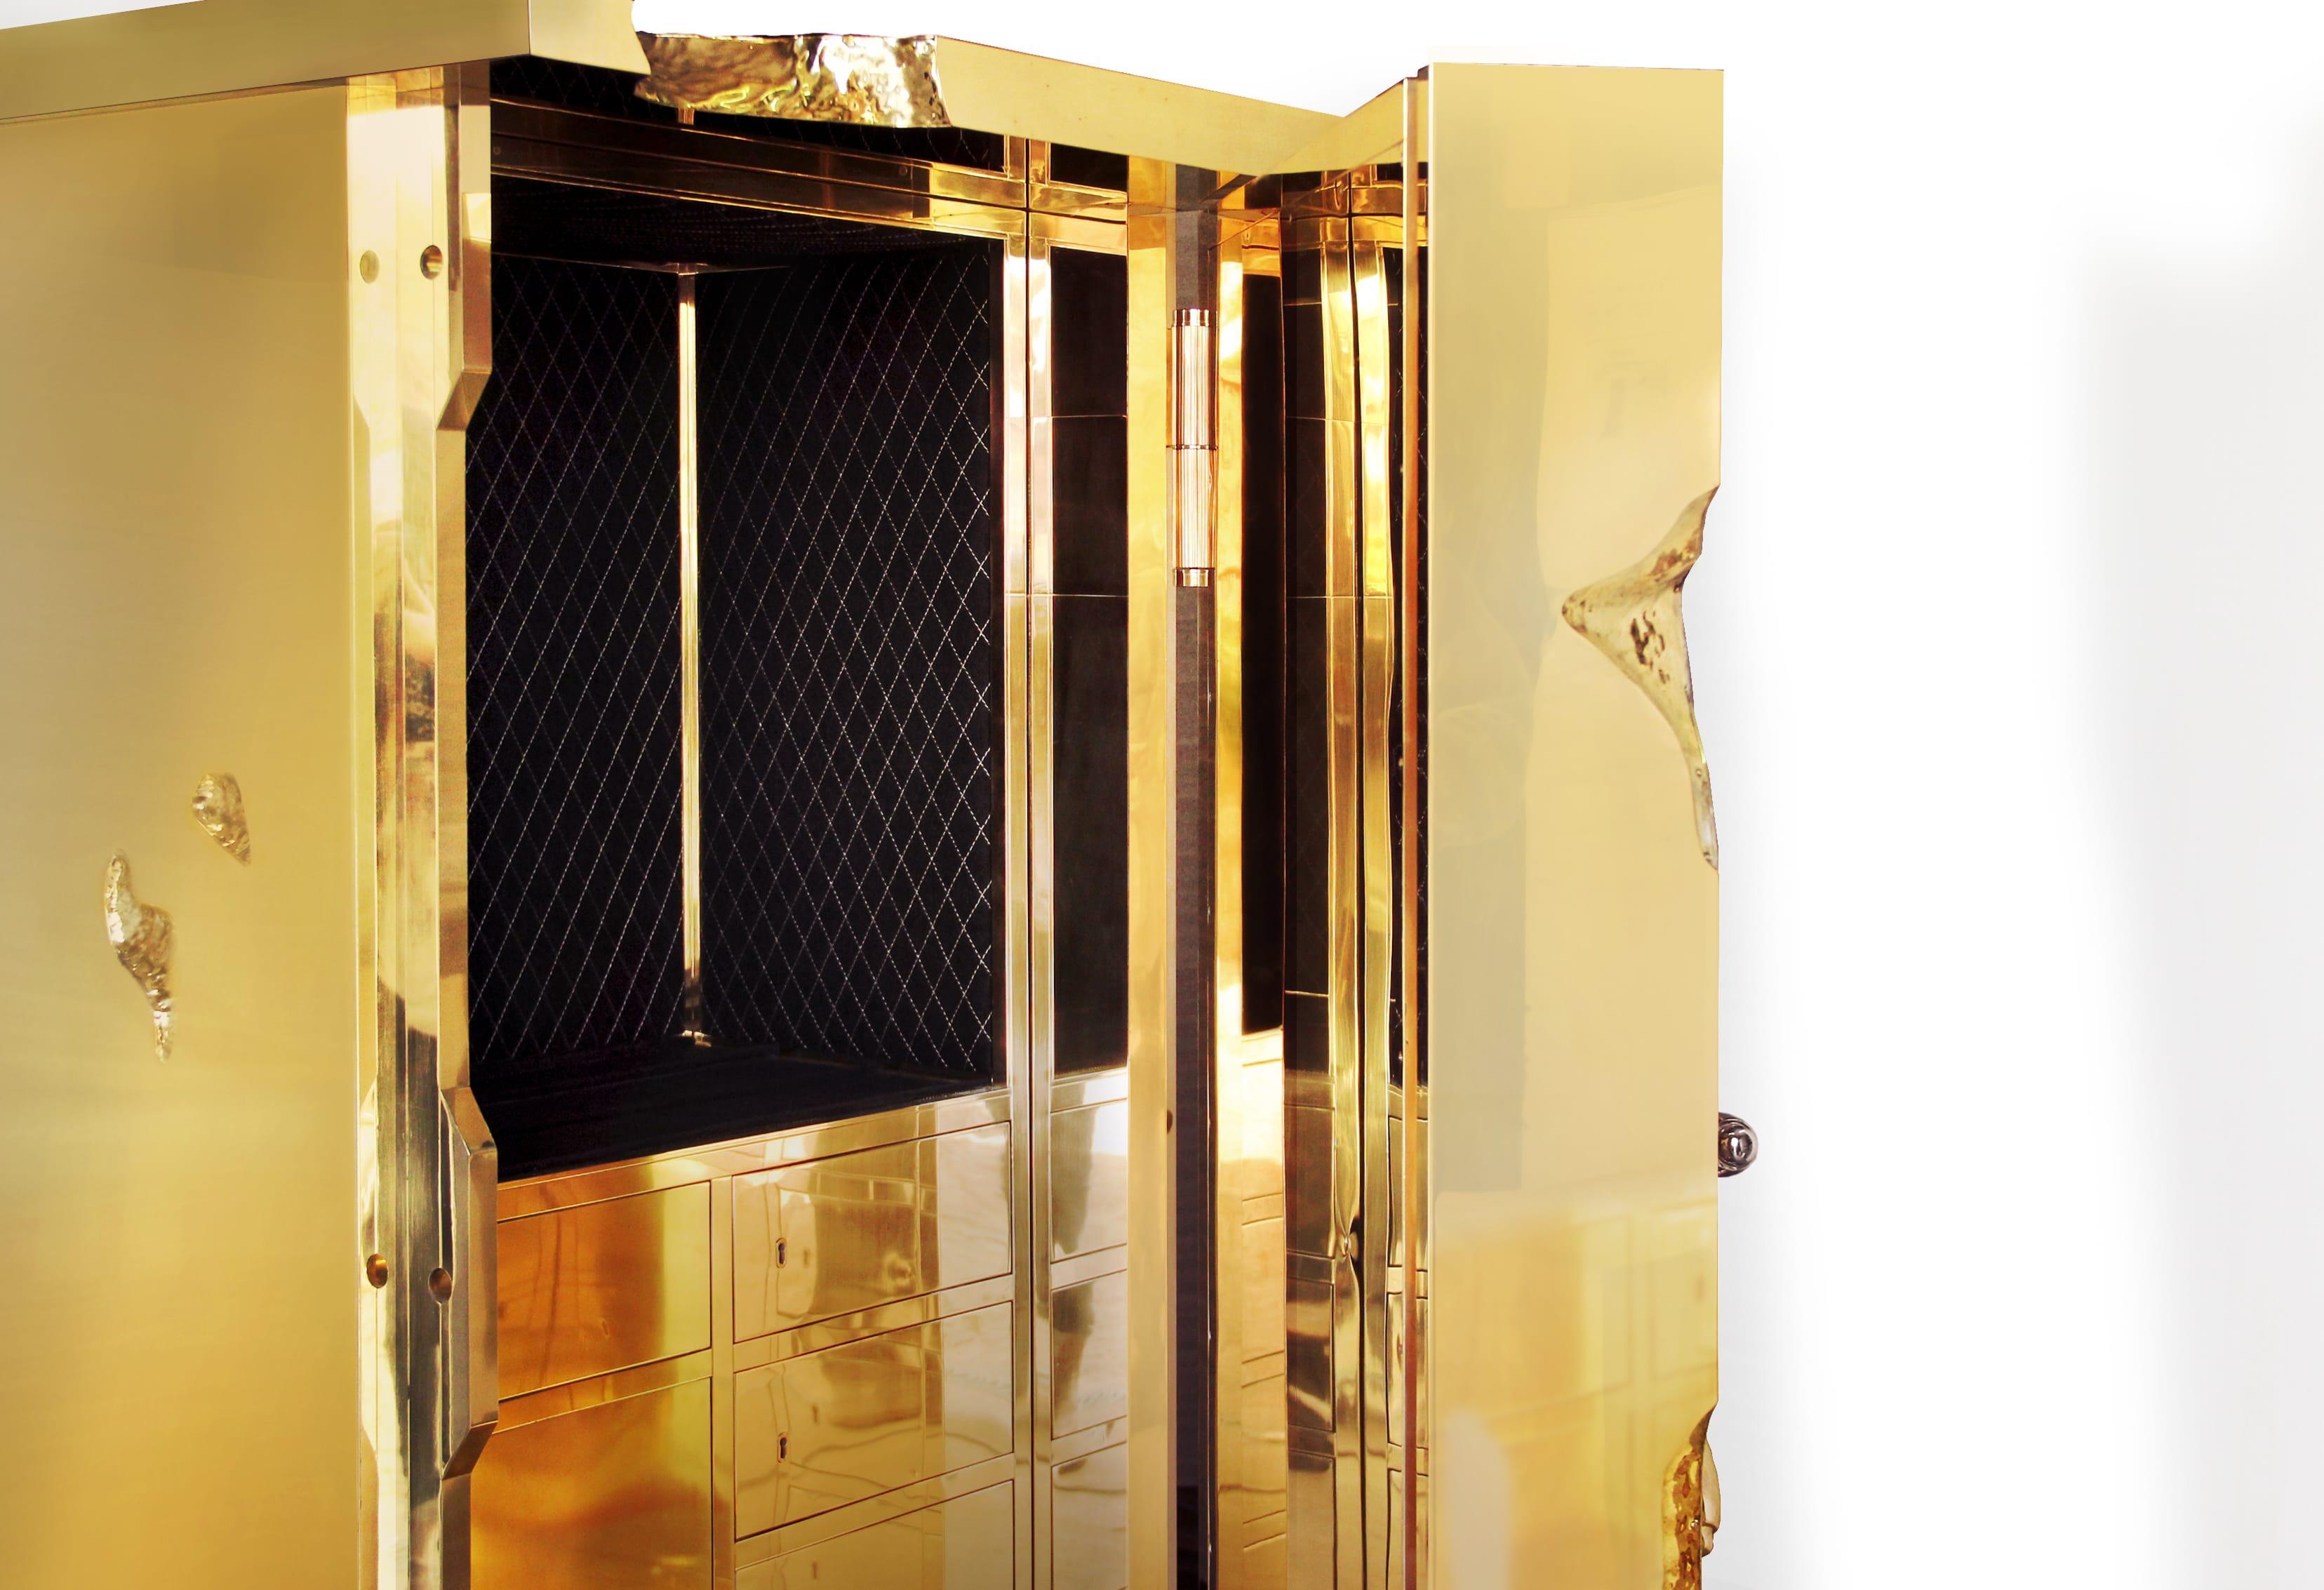 Portuguese In Stock in Los Angeles, Millionaire Gold Luxury Safe, designed by Boca Do Lobo